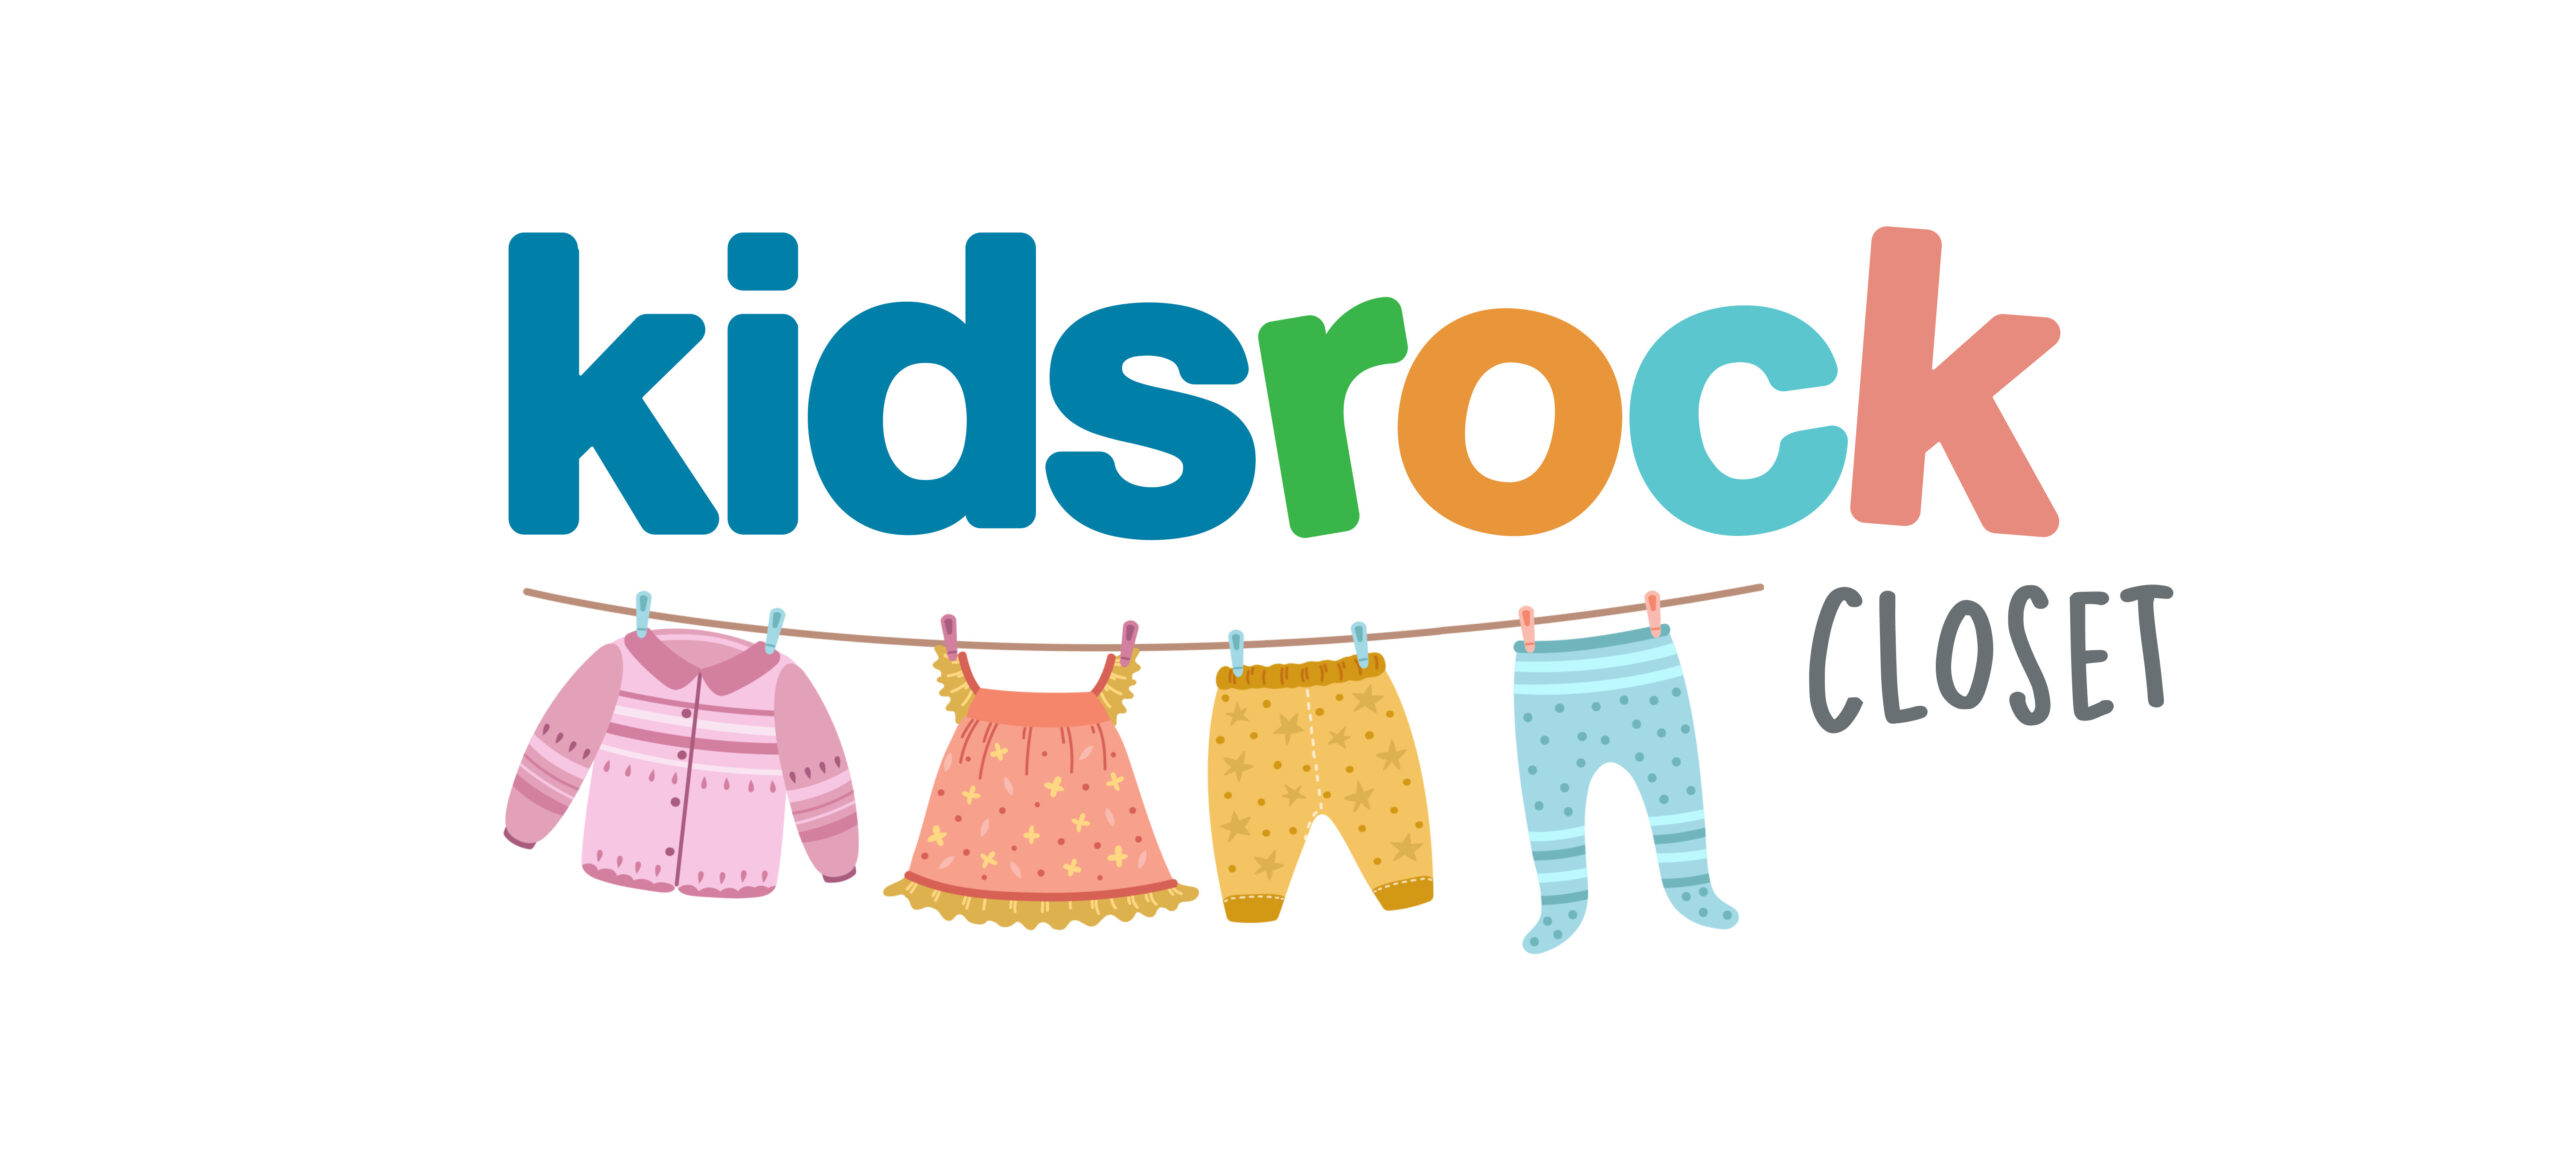 KidsRock Closet logo